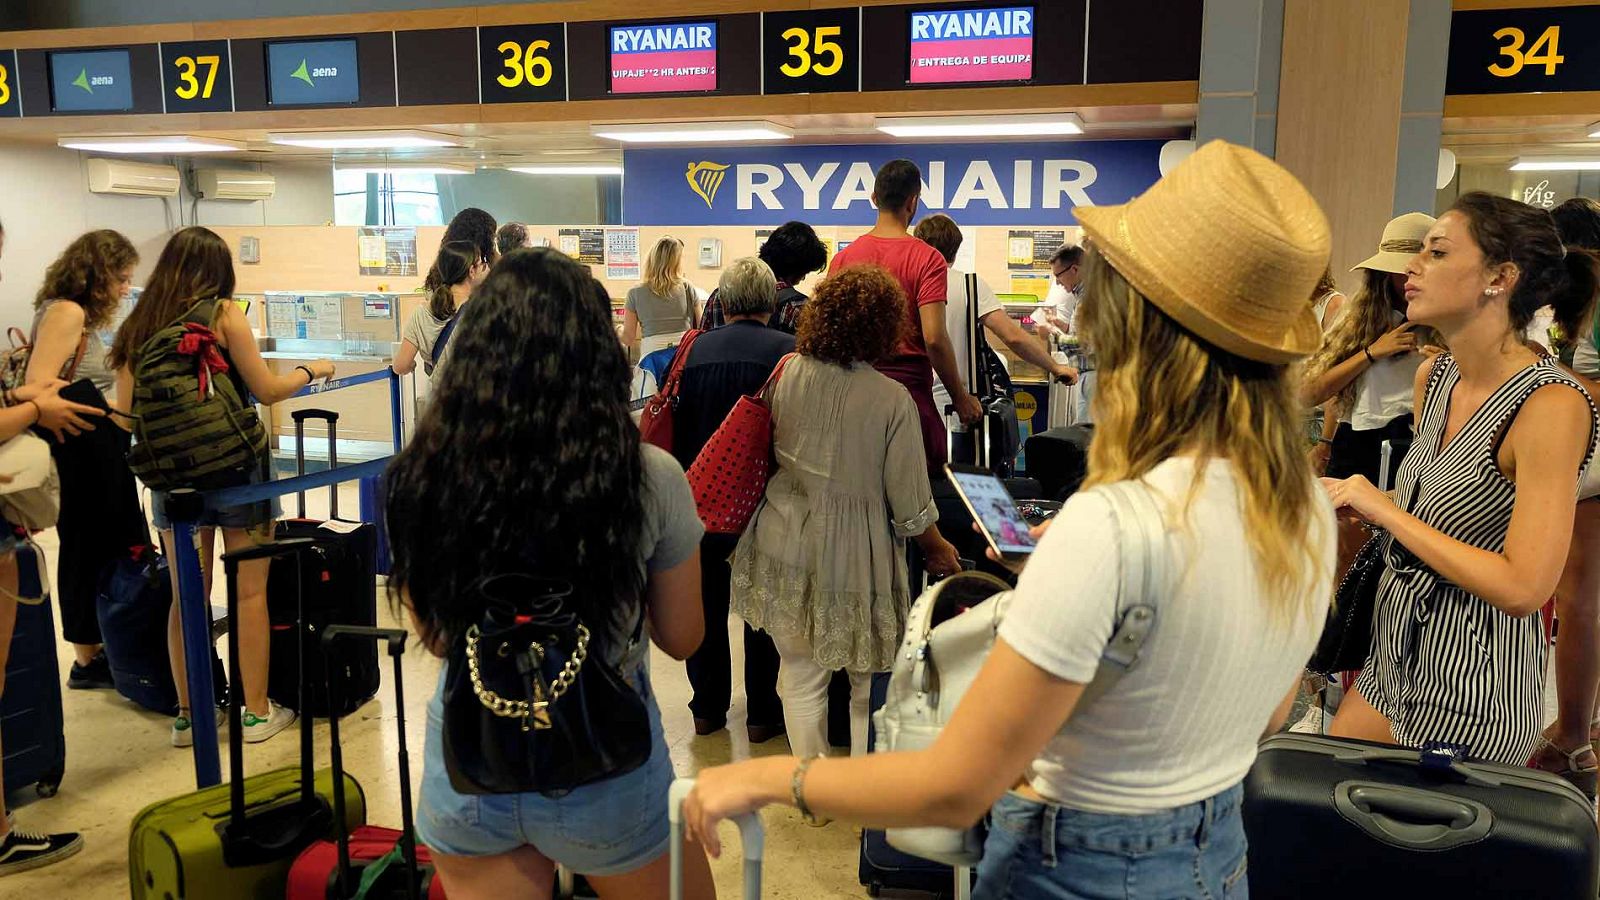 Huelga de Ryanair | Segunda jornada sin incidentes